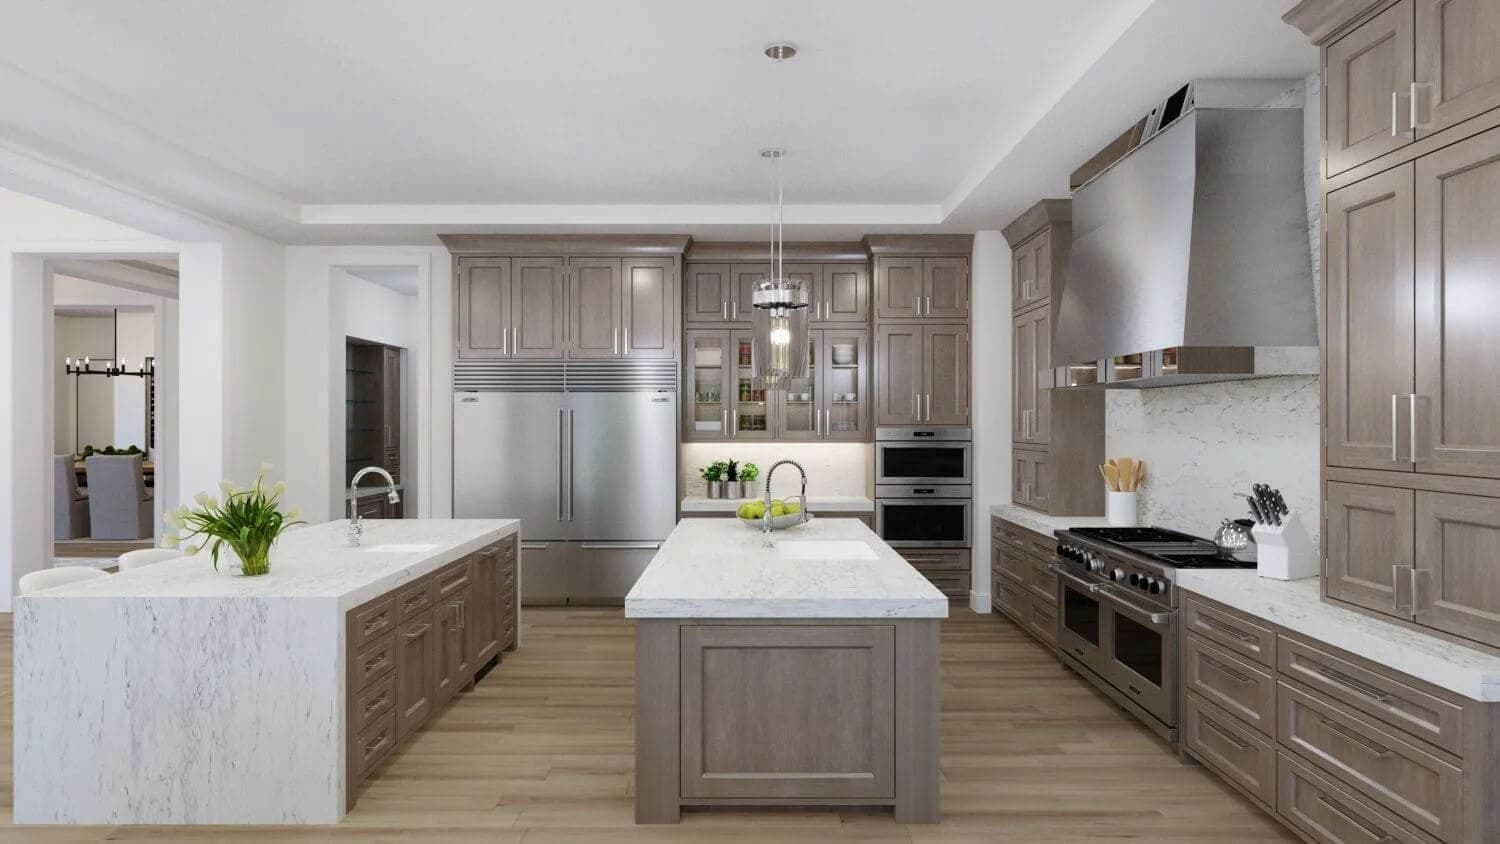 PARADISE VALLEY - Calvis Wyant | Arizona Luxury Custom Home Builder ...